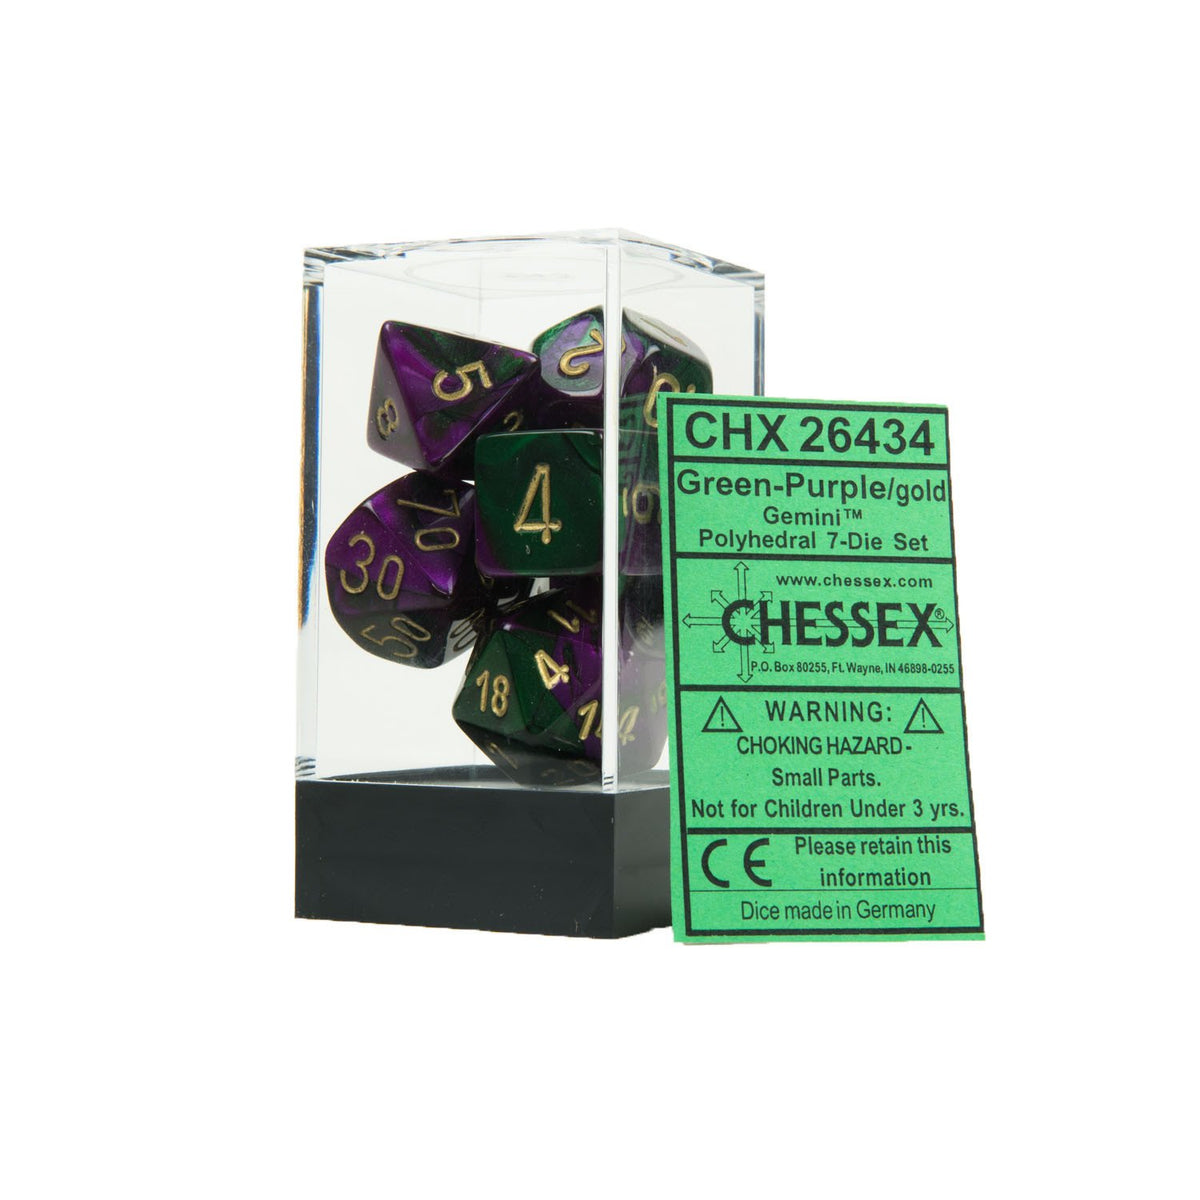 Chessex - Gemini Polyhedral 7-Die Set - Green Purple/Gold (CHX26434)